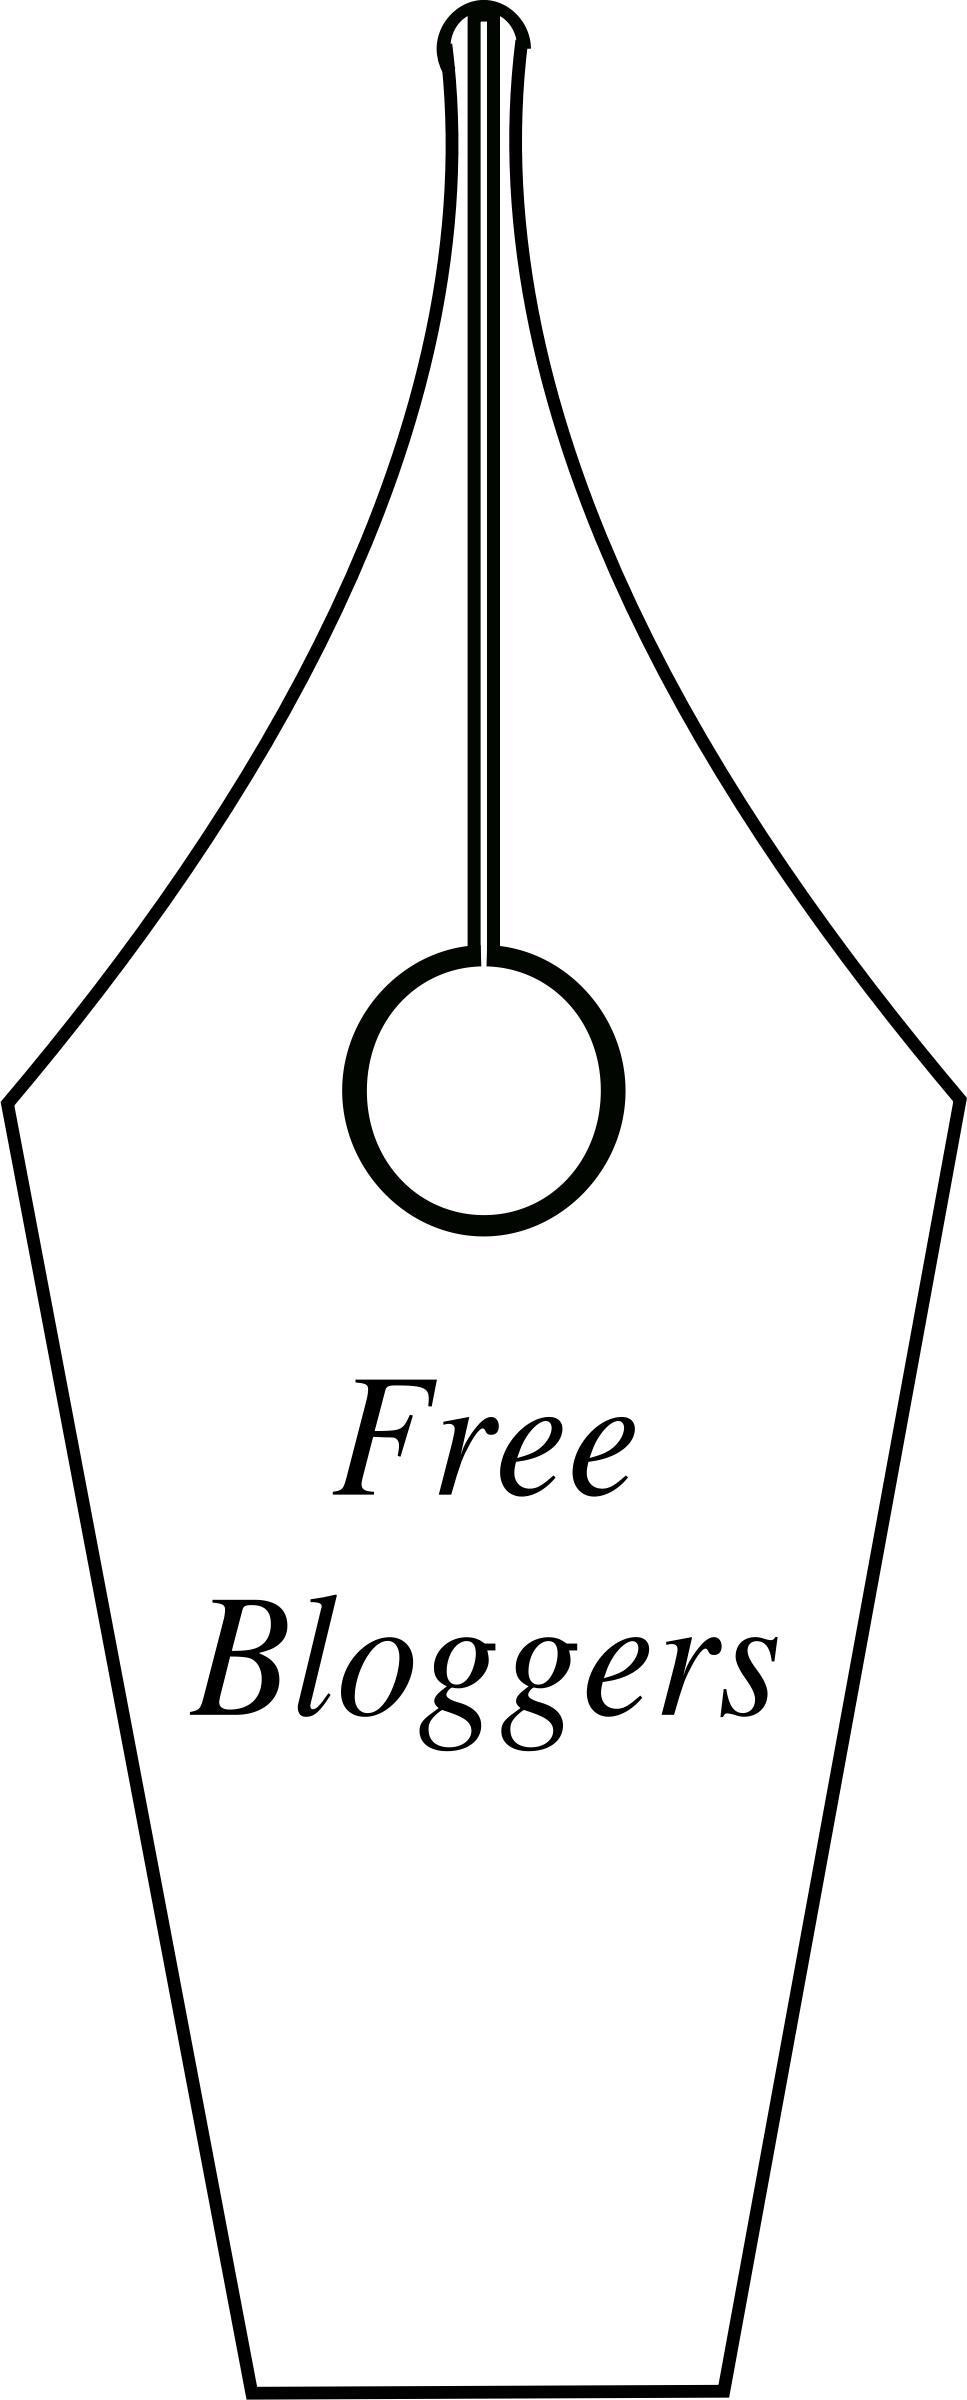 Free Blogger png transparent